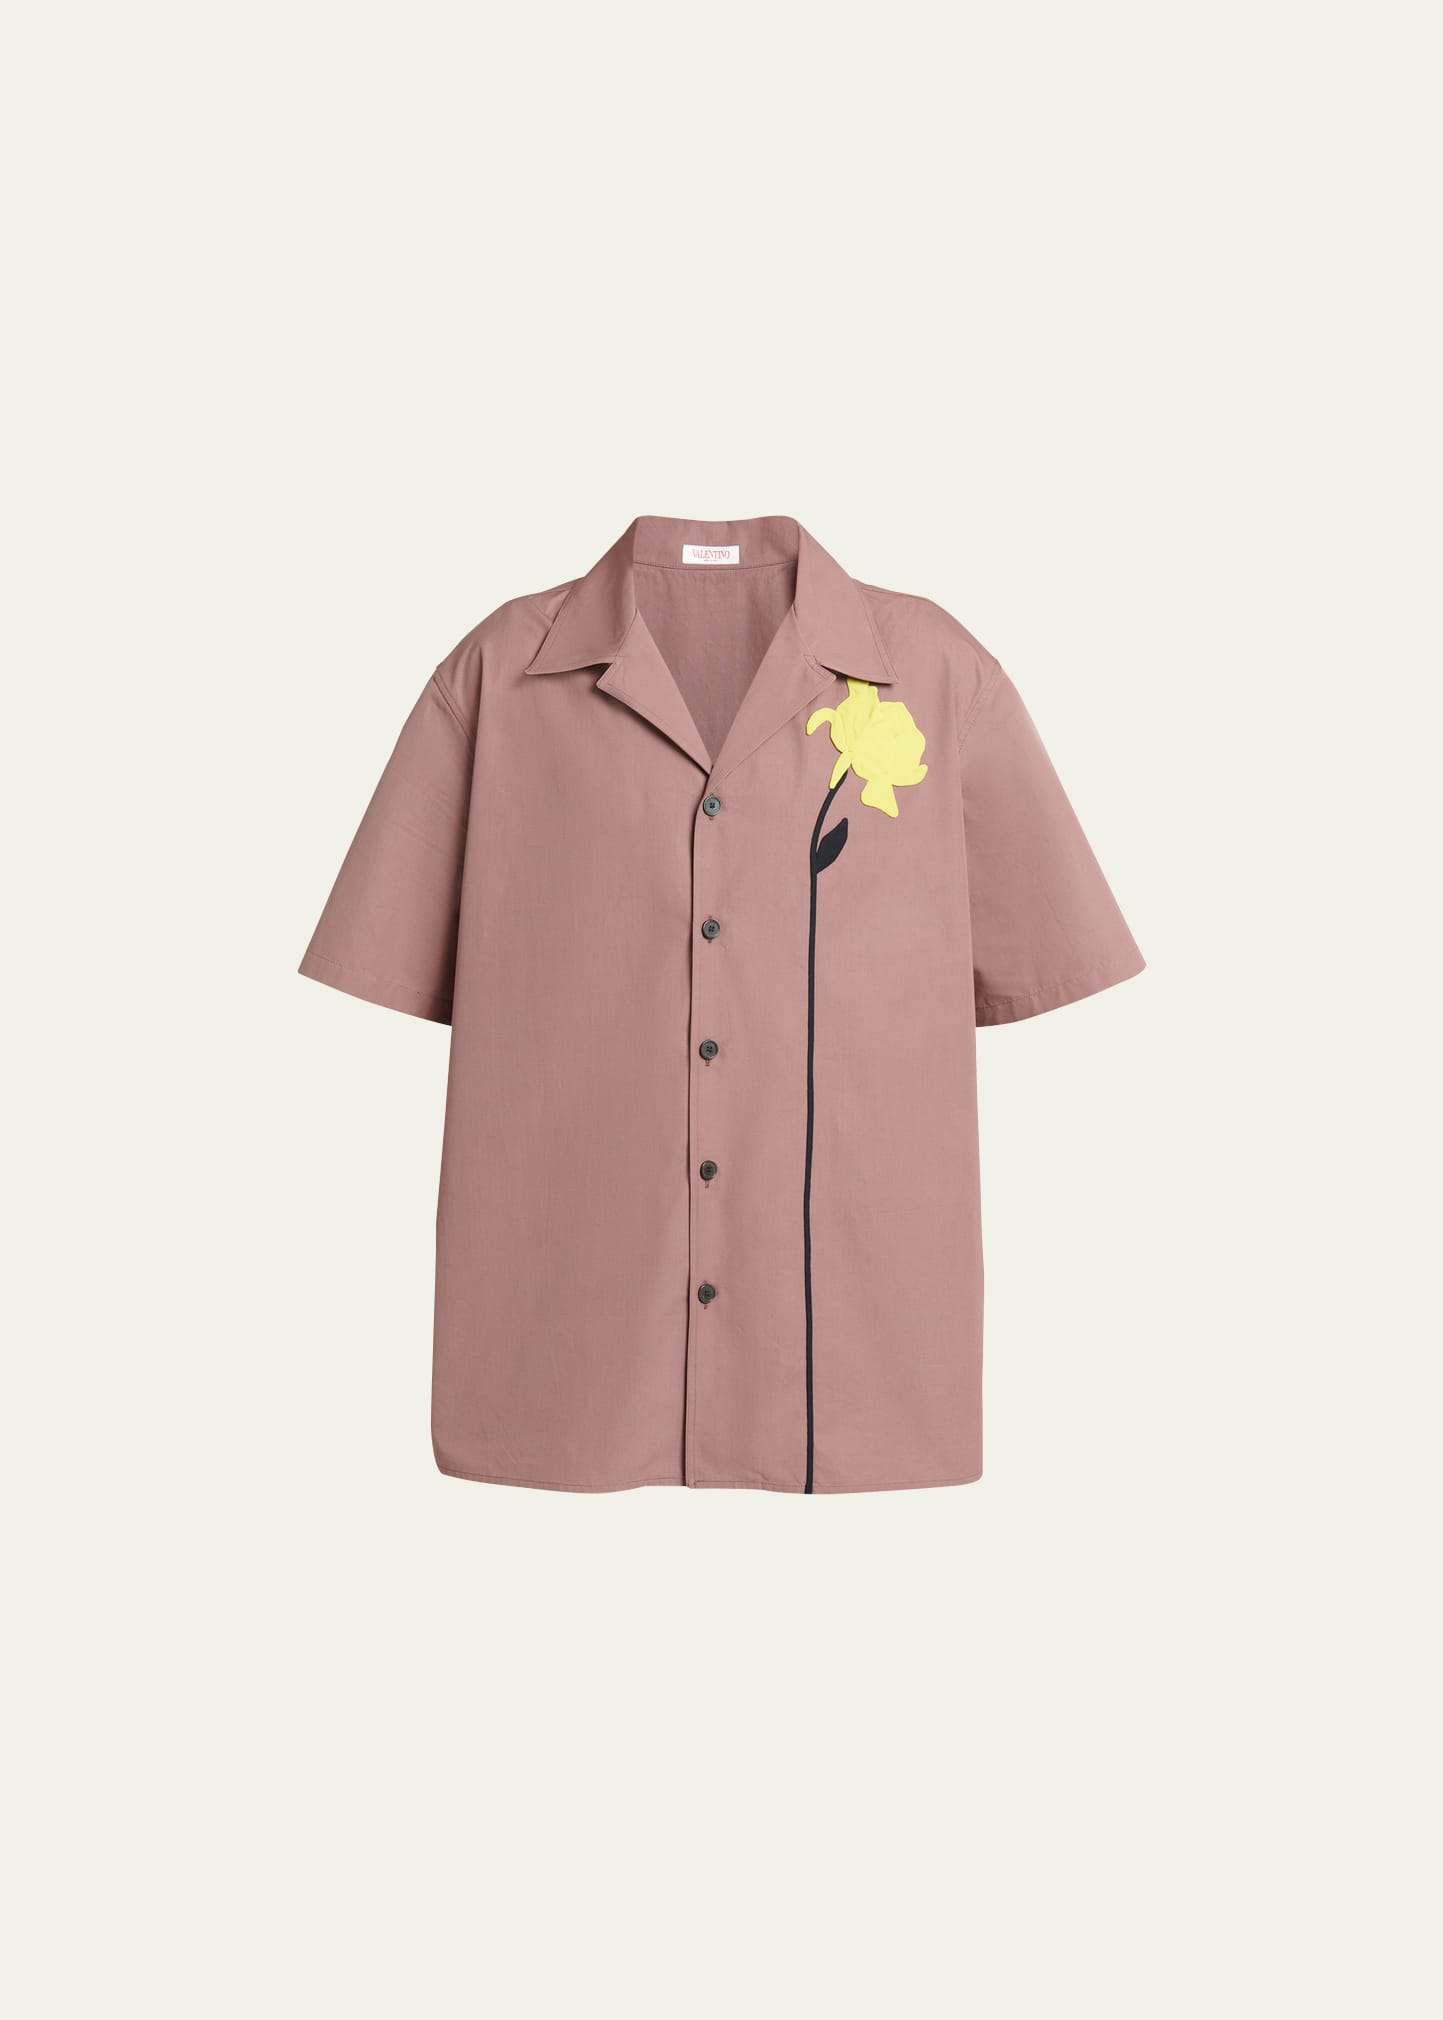 Valentino Men's Poplin Flower Embroidery Camp Shirt In Mauve